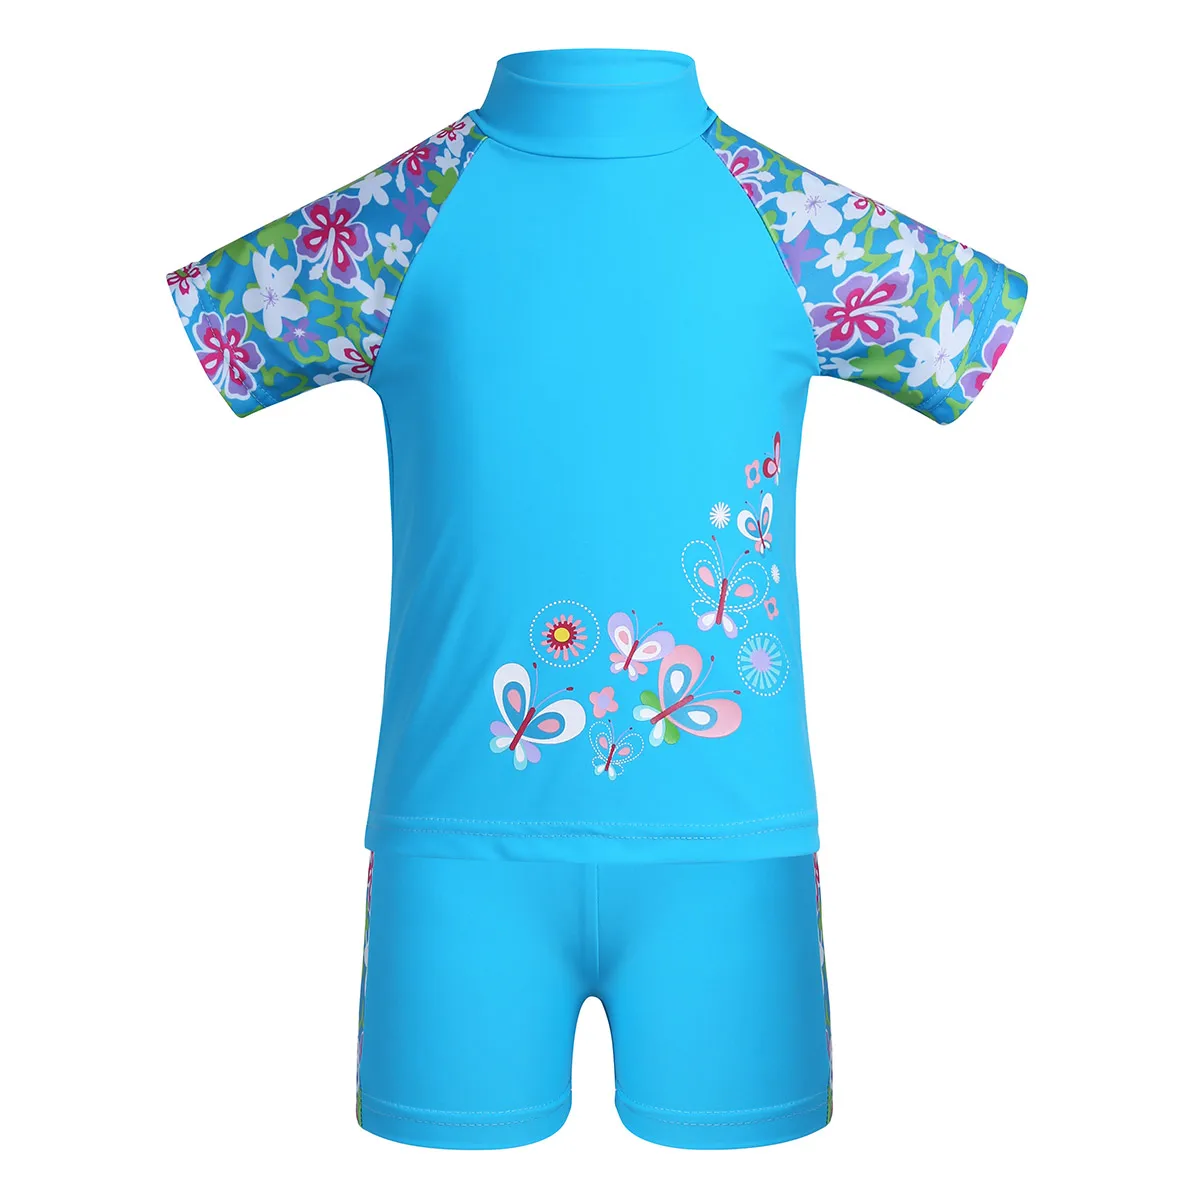 

2PCS Girls Tankini Floral Printed Swimsuit Swimwear Set Kids Cute Tops with Bottoms Bathing Suit Pool Beachwear